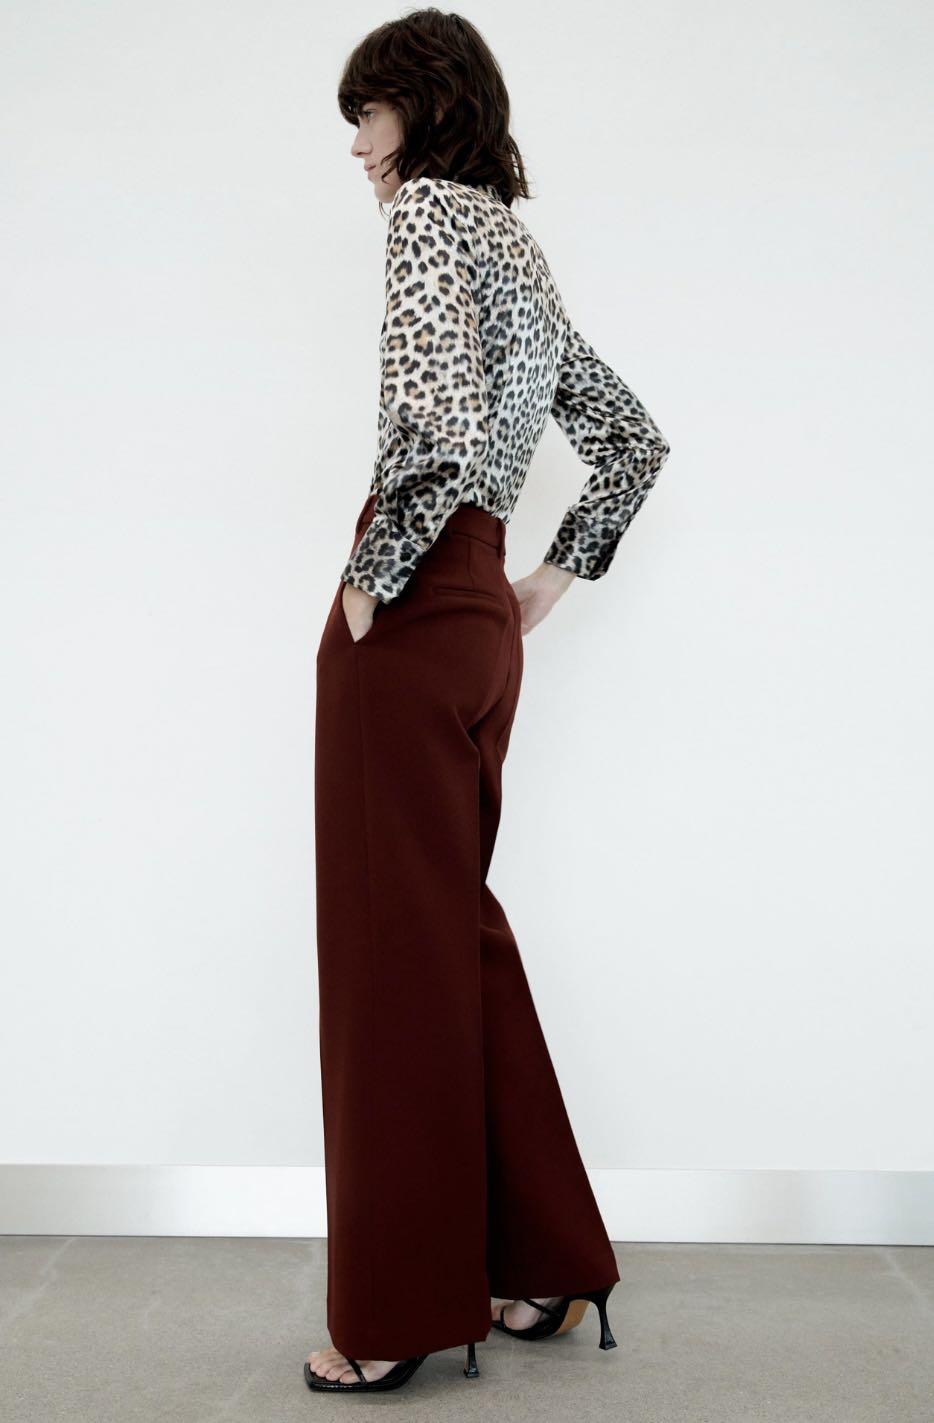 NWT | Zara Red Burgundy Faux Leather Hi-Rise Leggings Size M | Zara,  Burgundy red, Clothes design